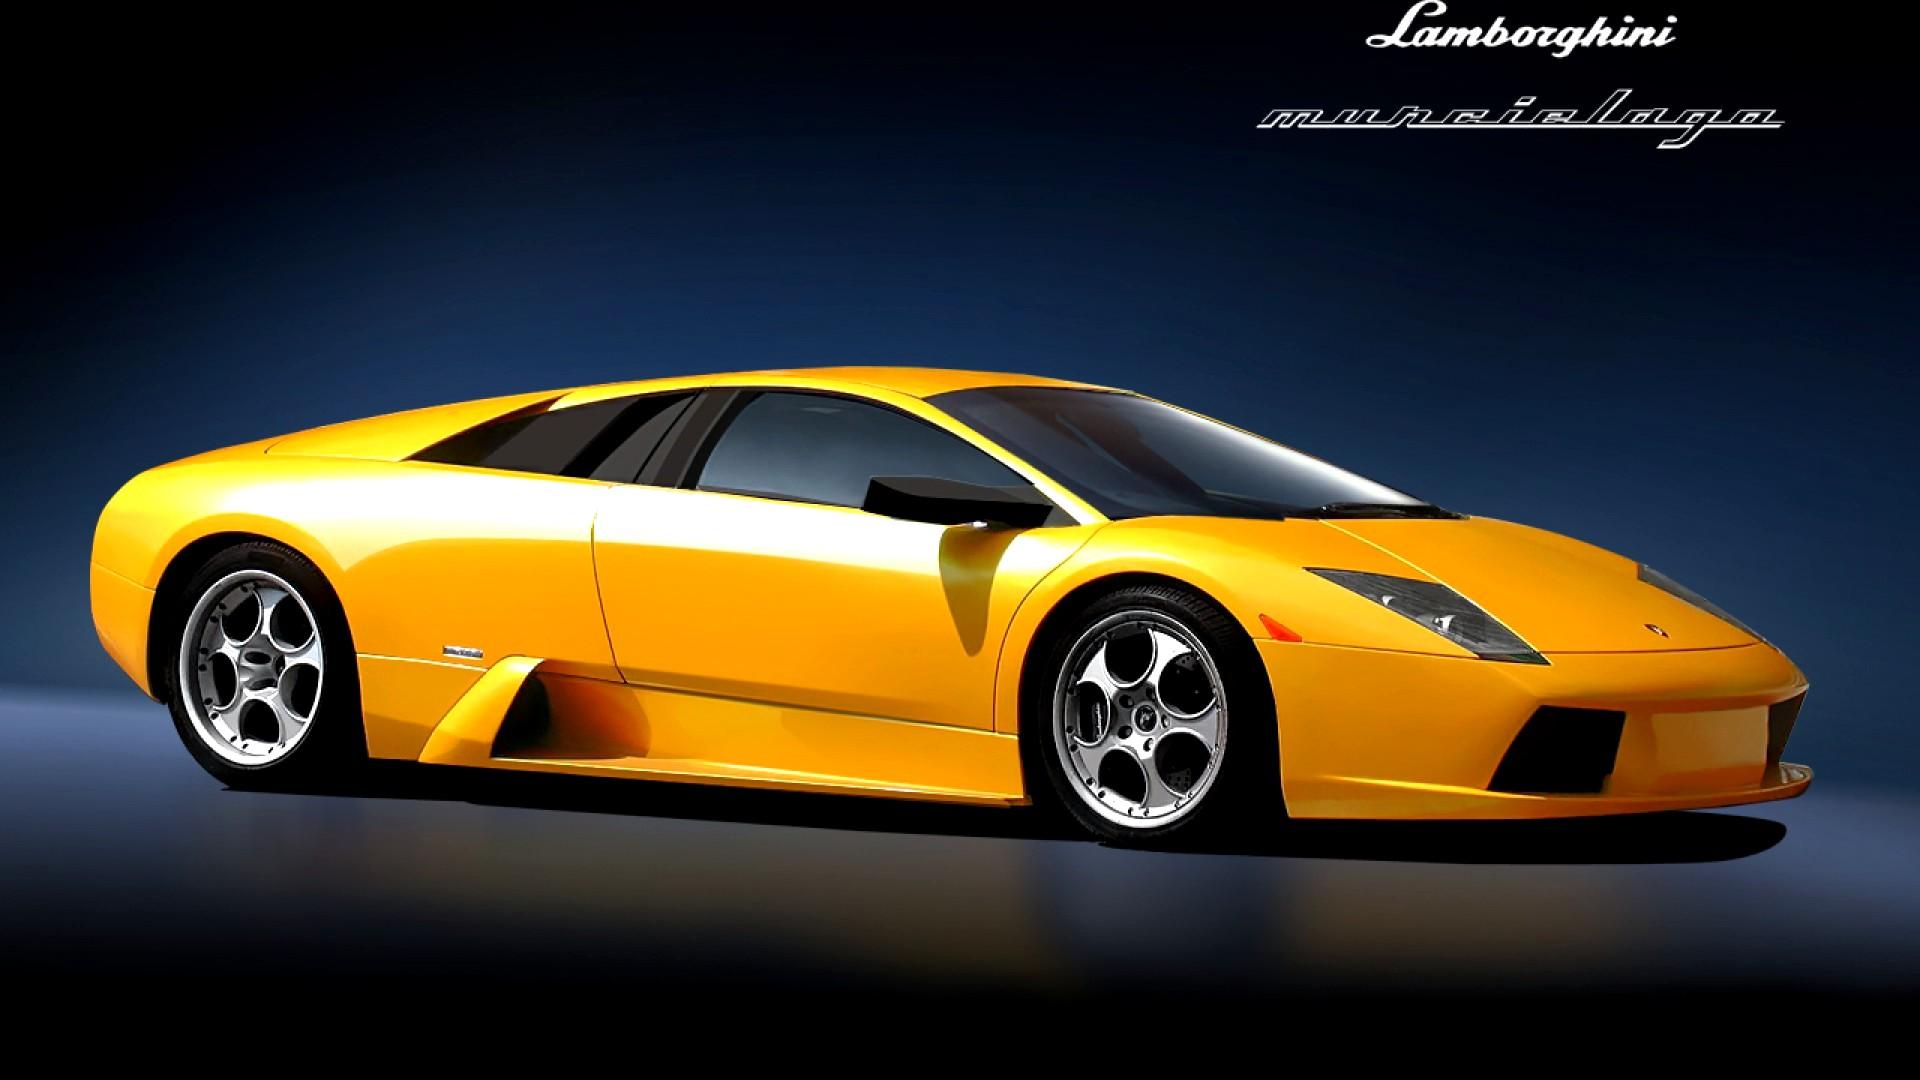 Lamborghini Murcielago Wallpaper HD Download